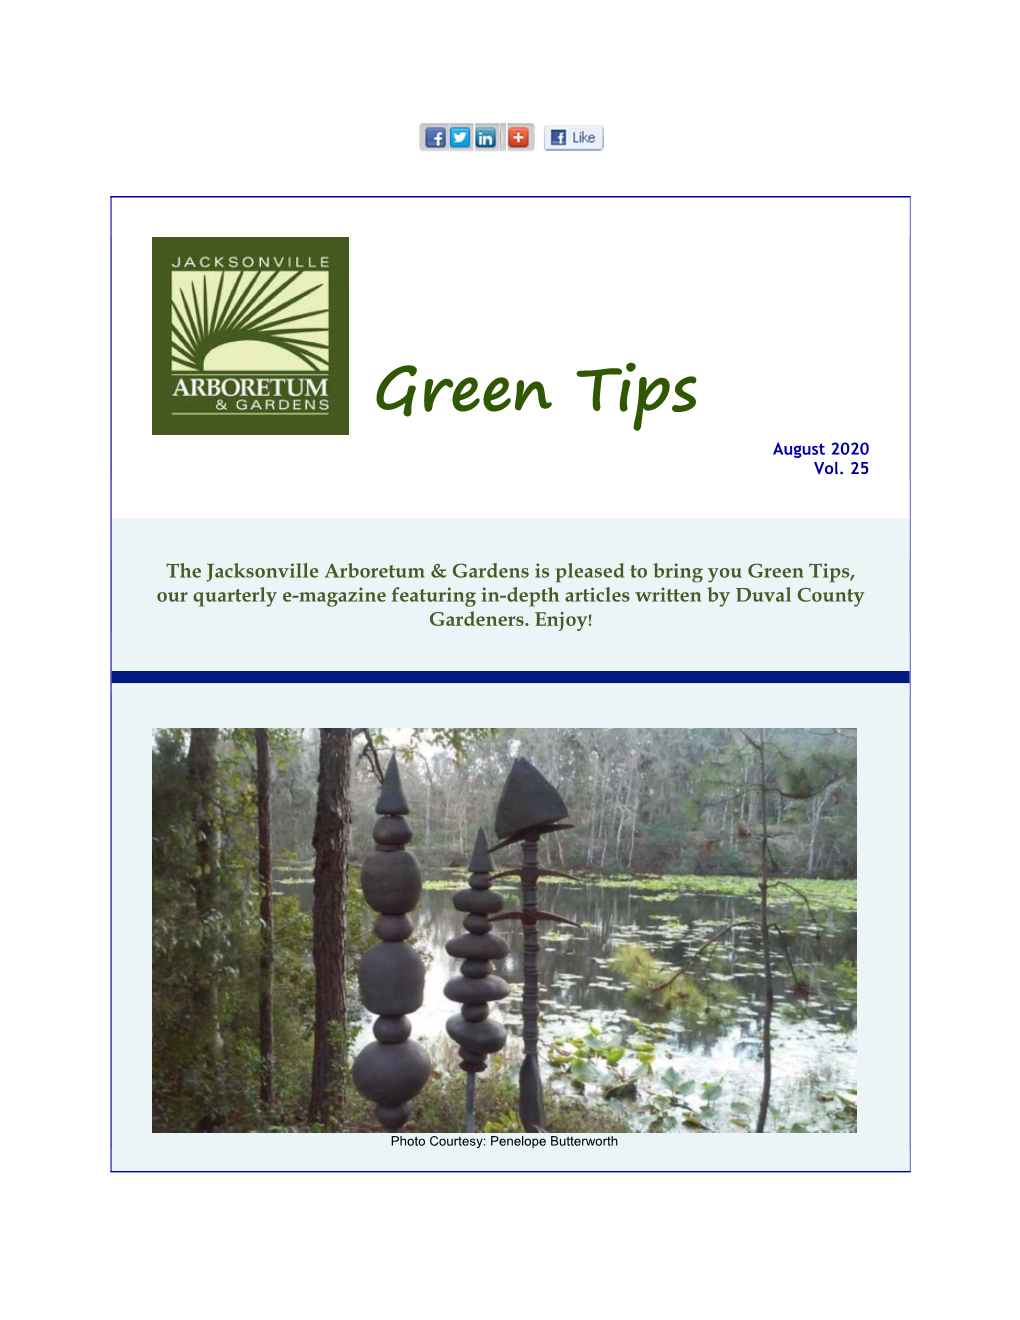 Green Tips Quarterly